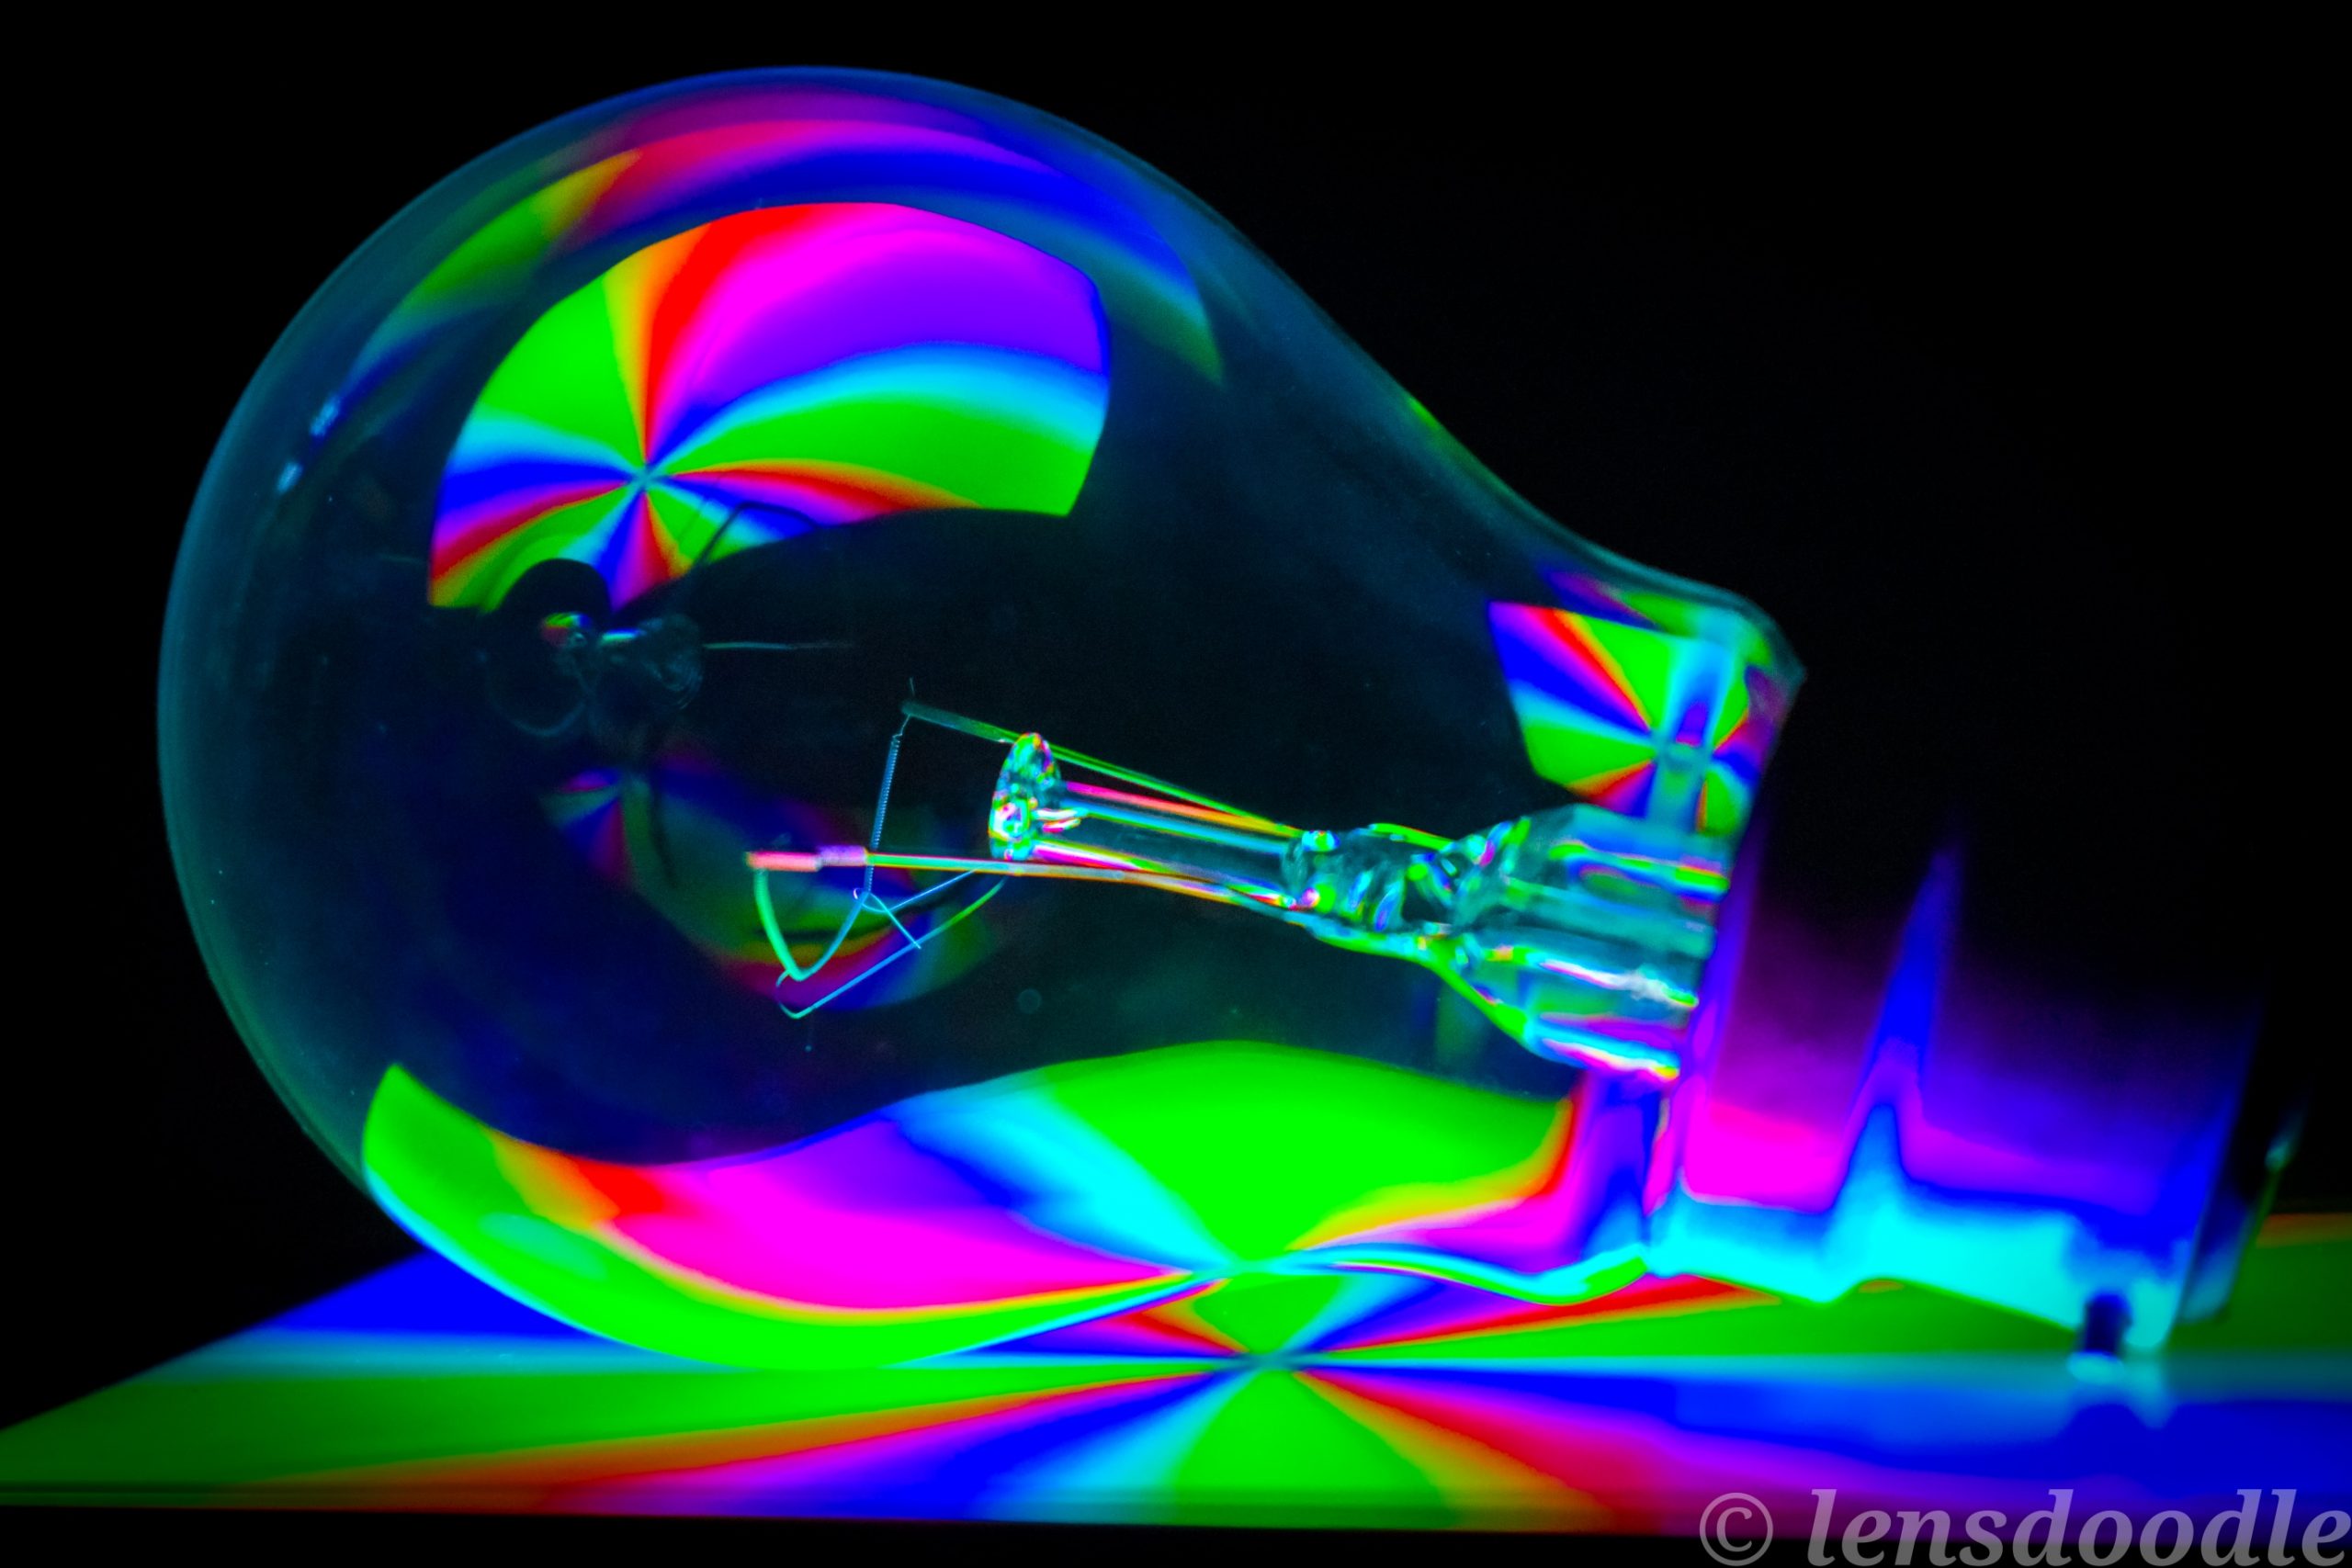 Creatively shot landscape of a light bulb